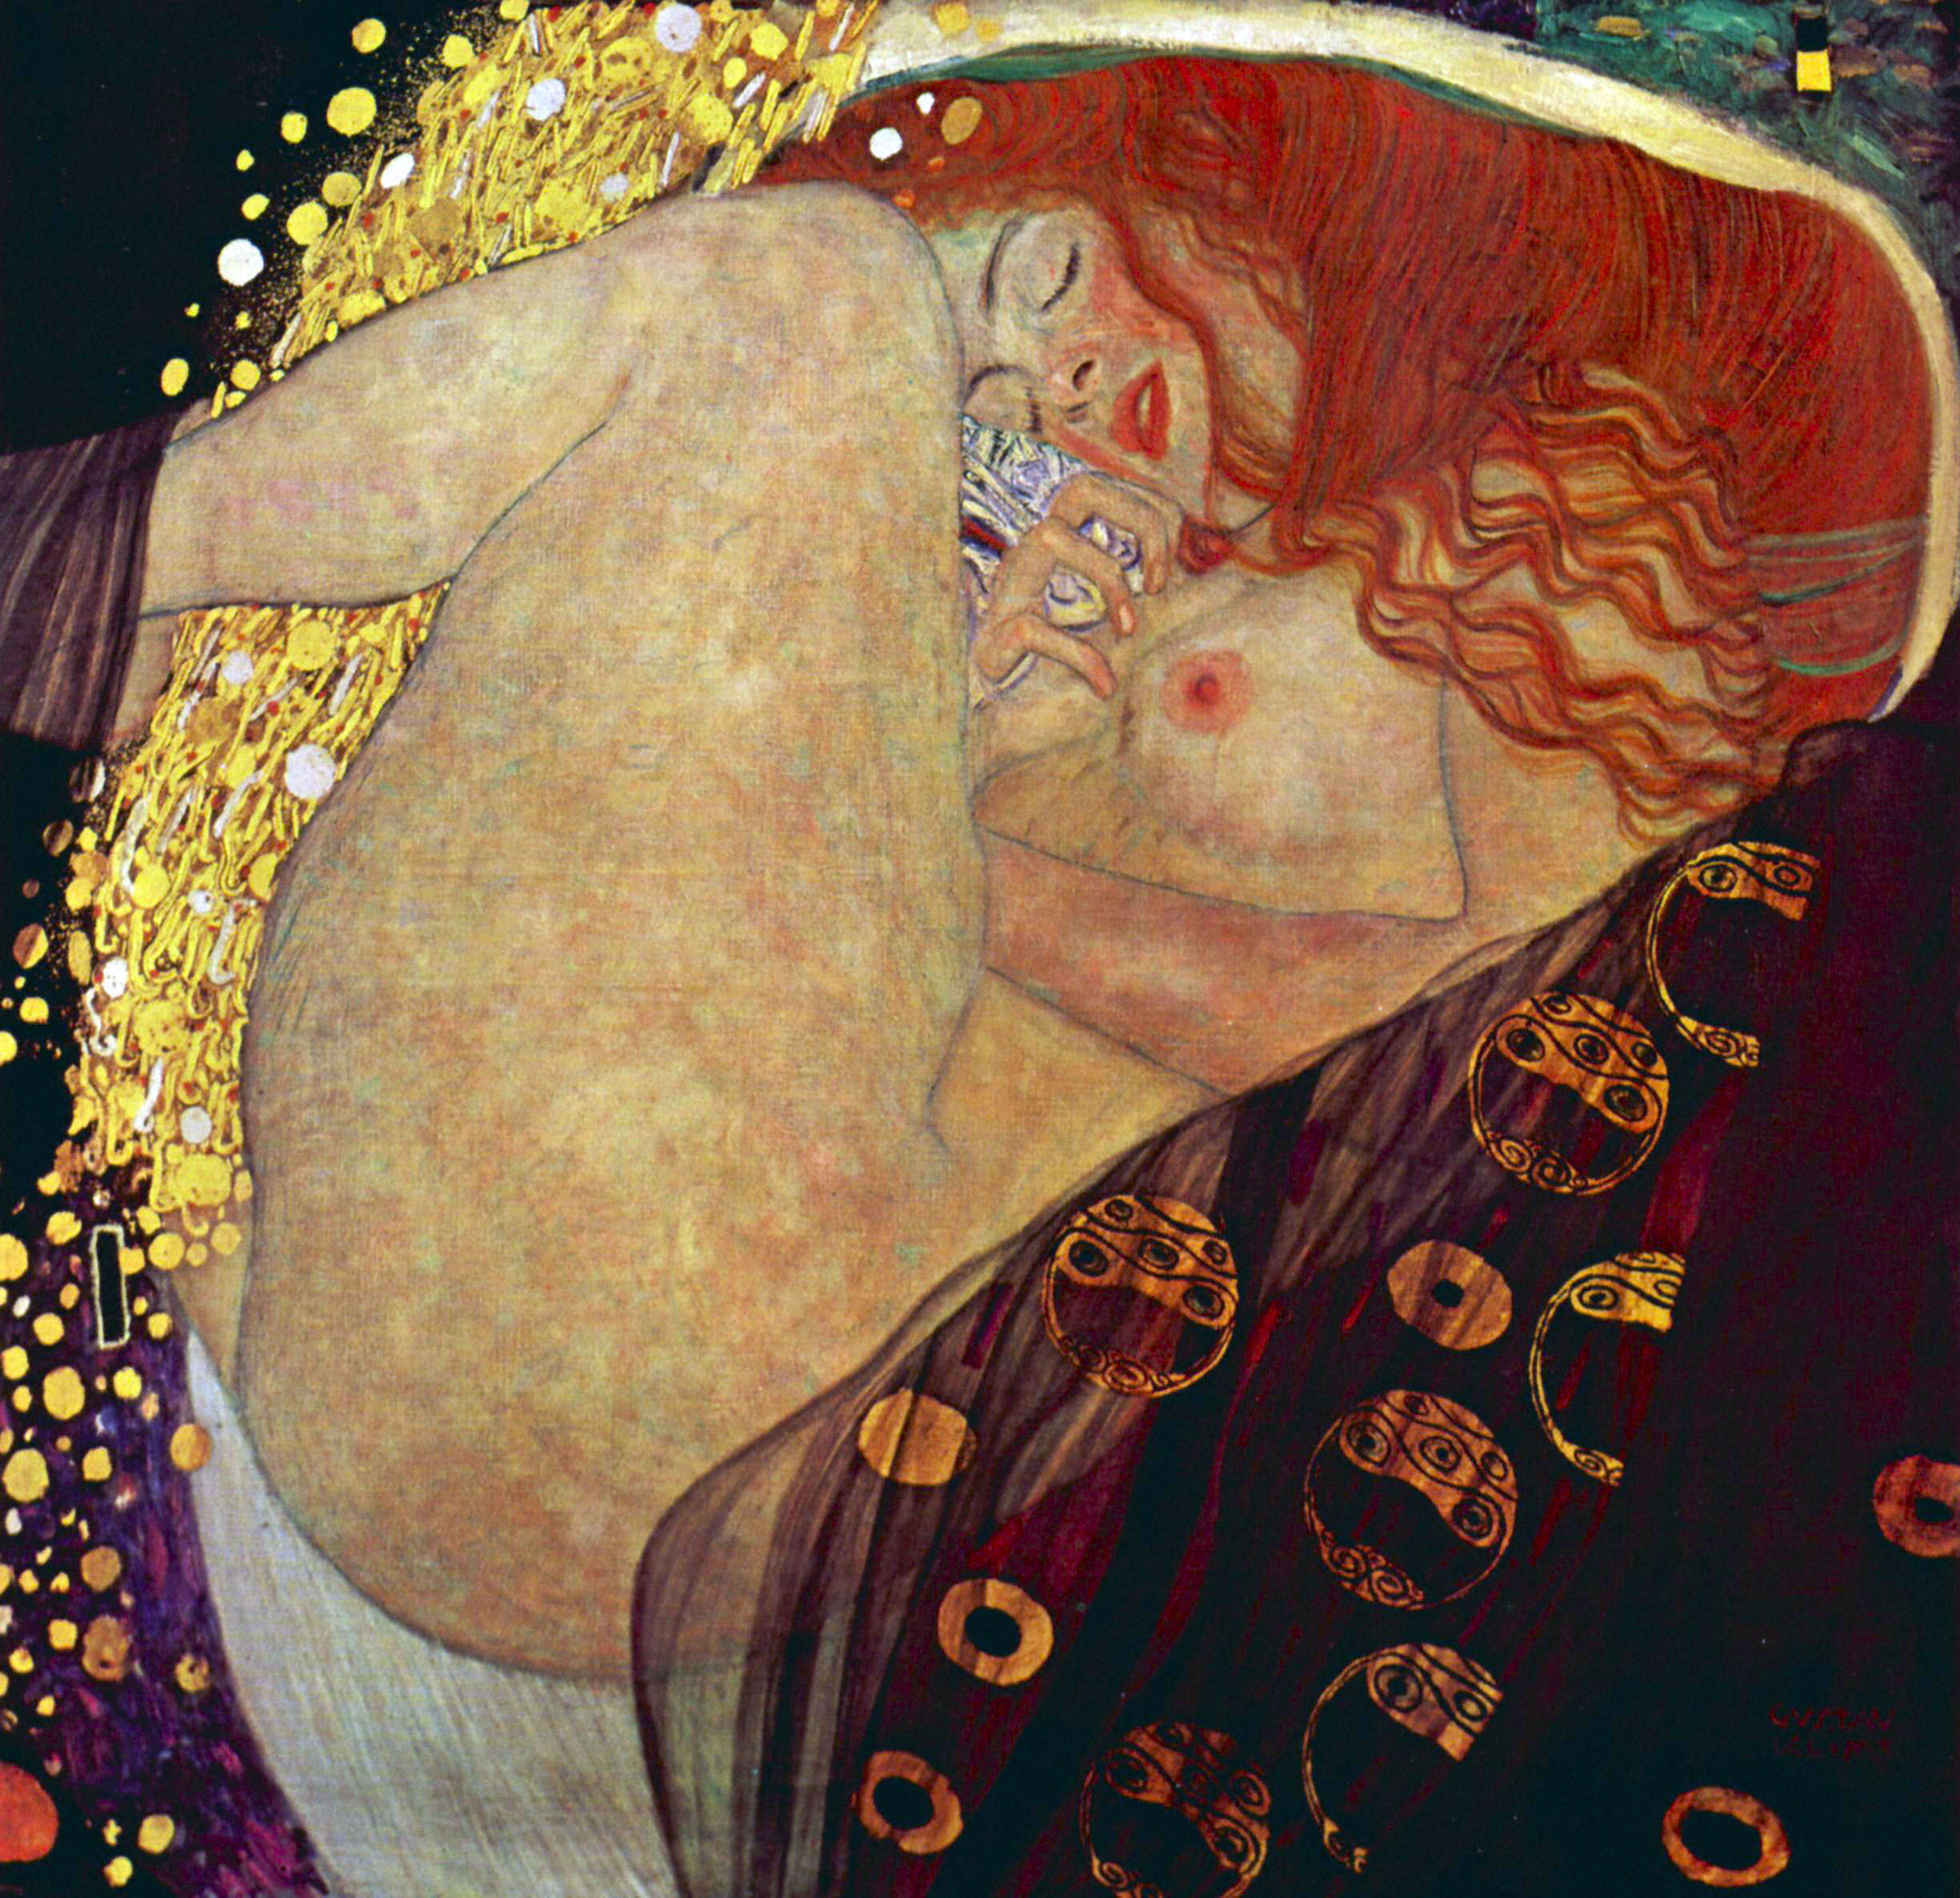 Danae by Gustav Klimt - 1907 coleção privada